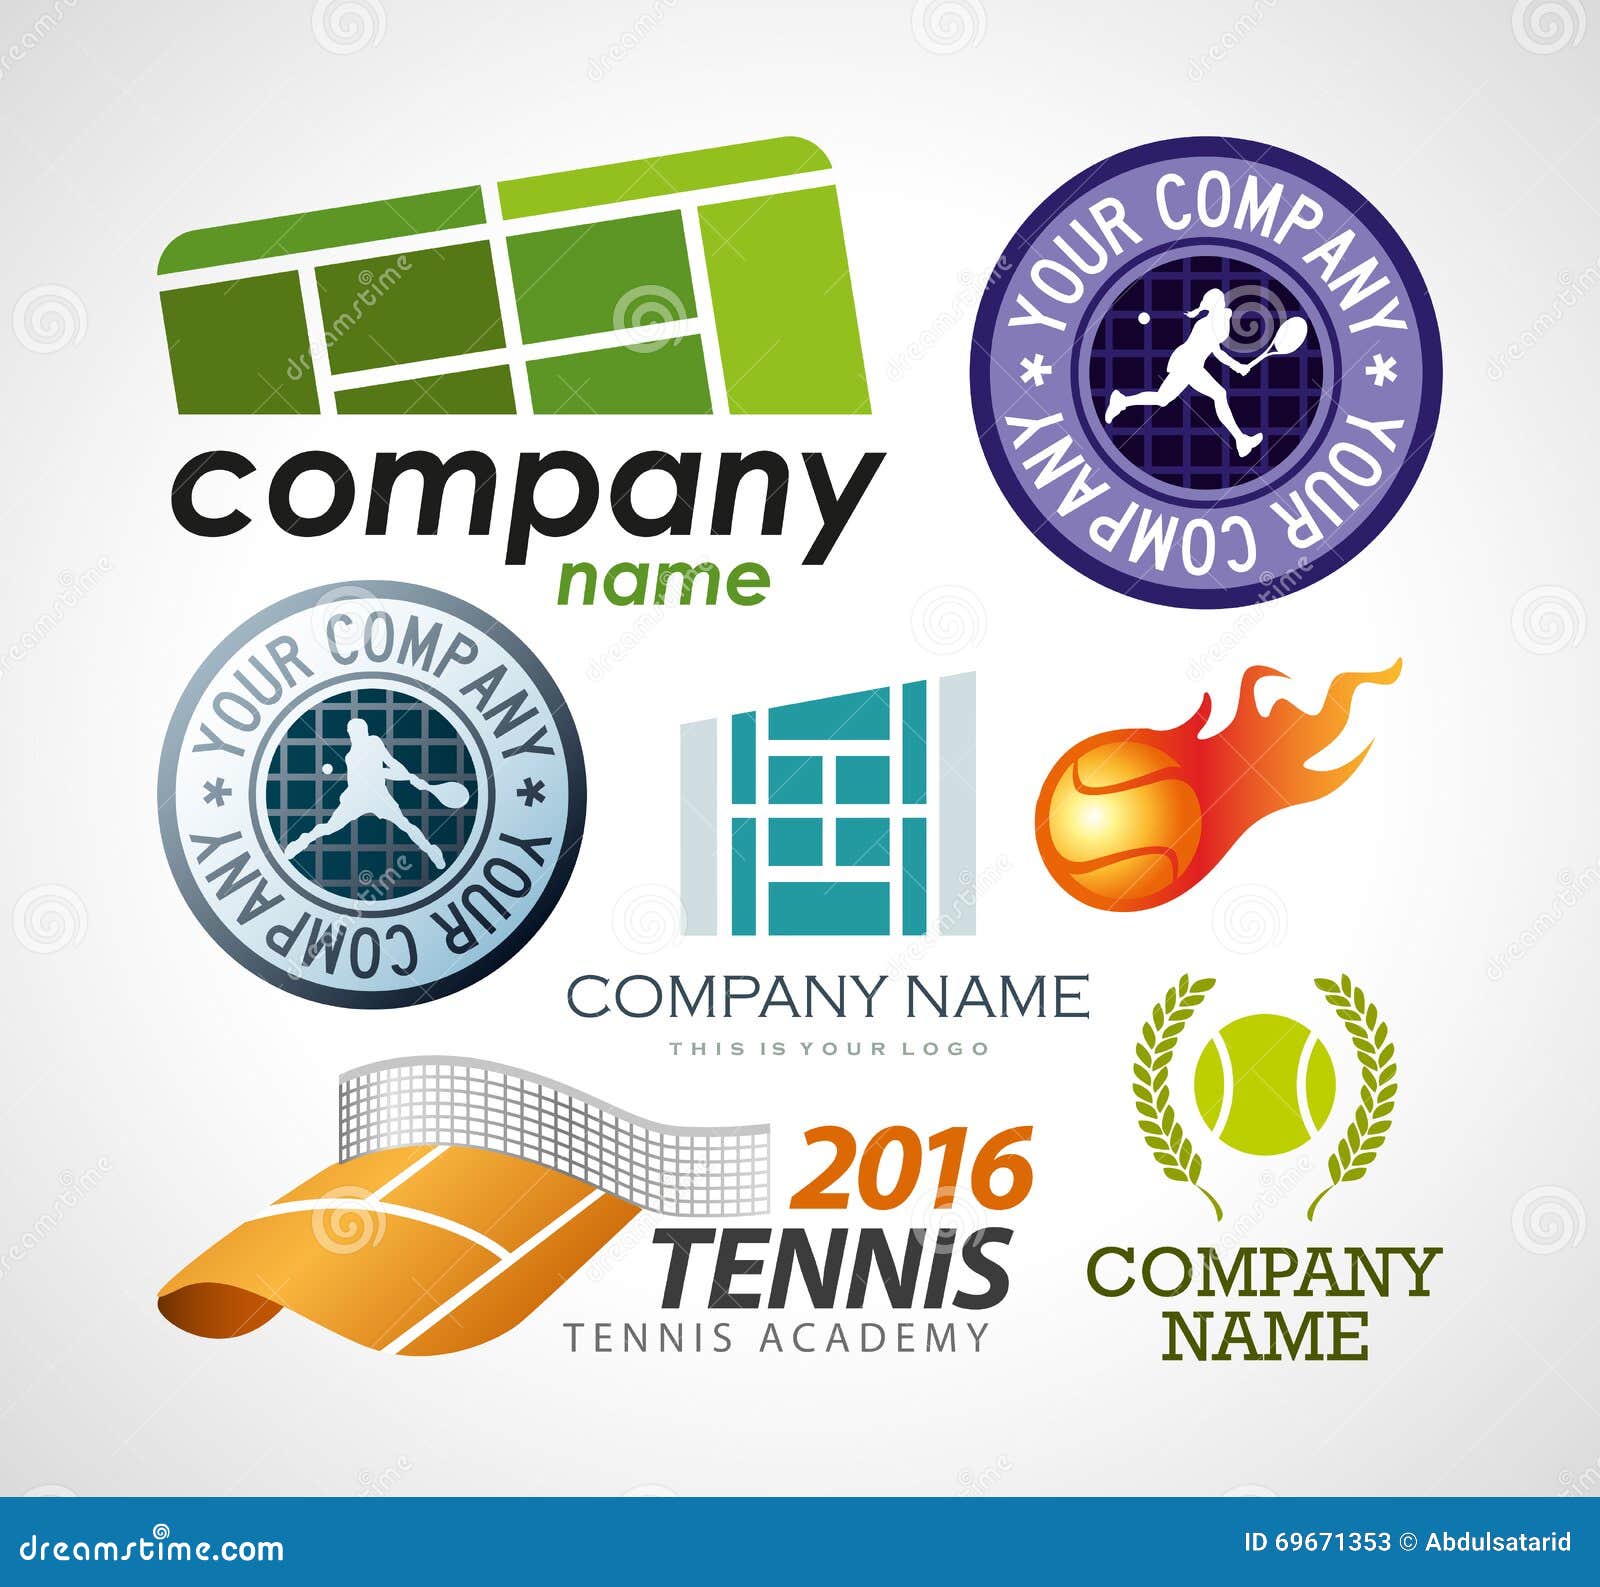 Tennis Logo Design Elements Stock Illustrations – 469 Tennis Logo Design Elements Stock Vectors & Clipart - Dreamstime